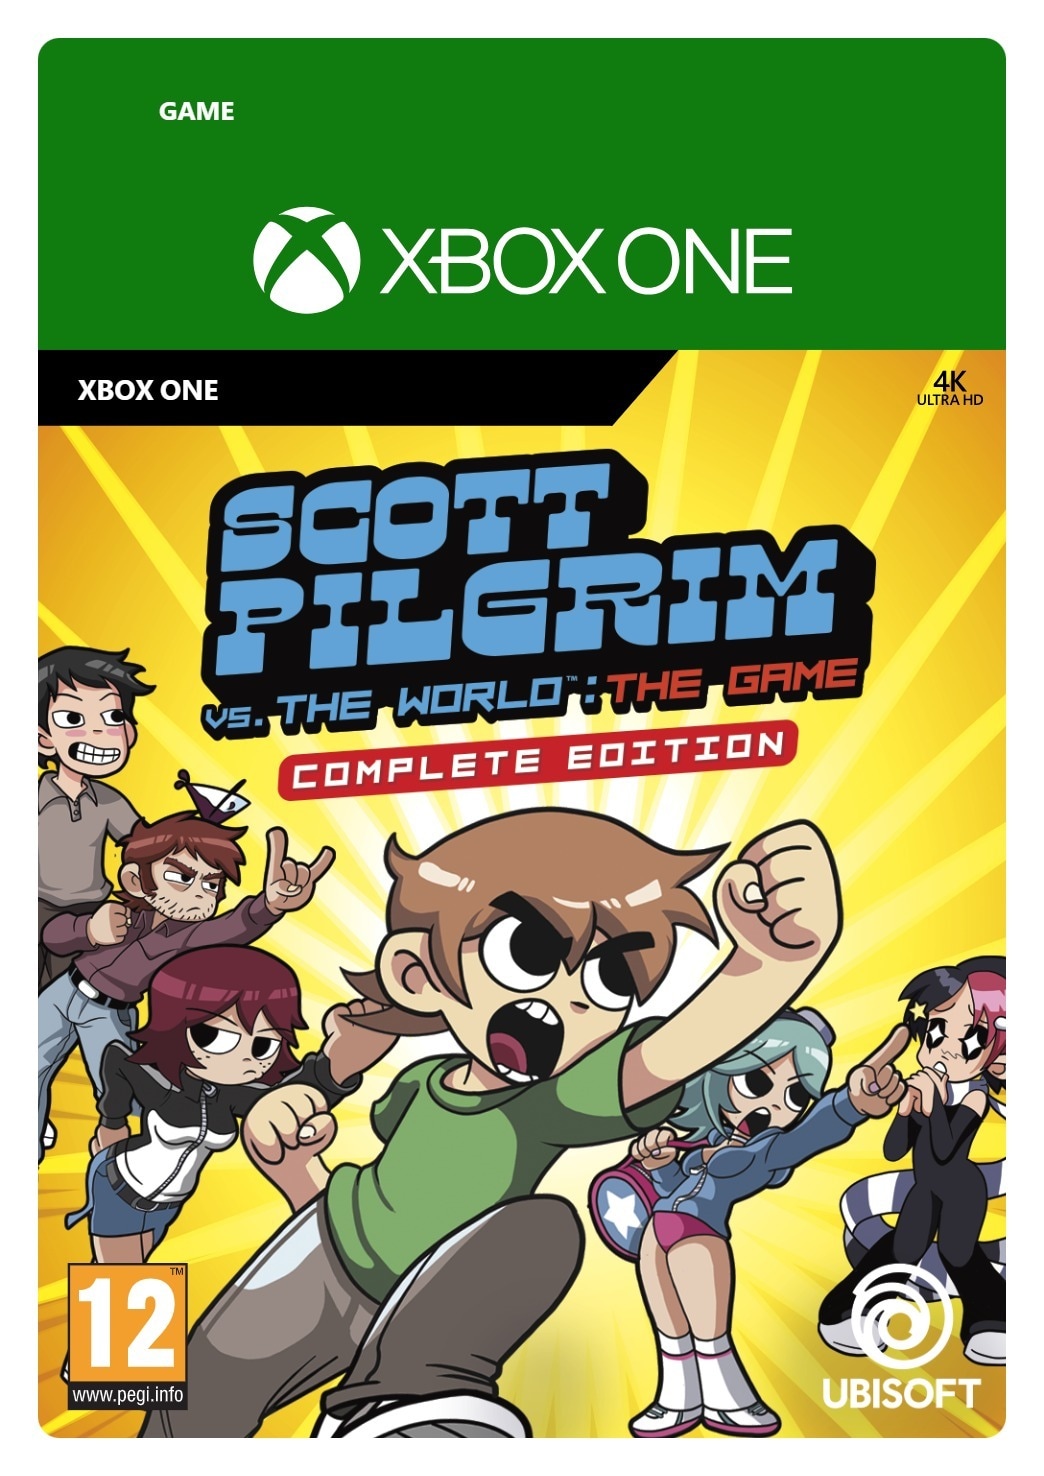 Scott Pilgrim vs. The World: The Game Complete Edition - XBOX One